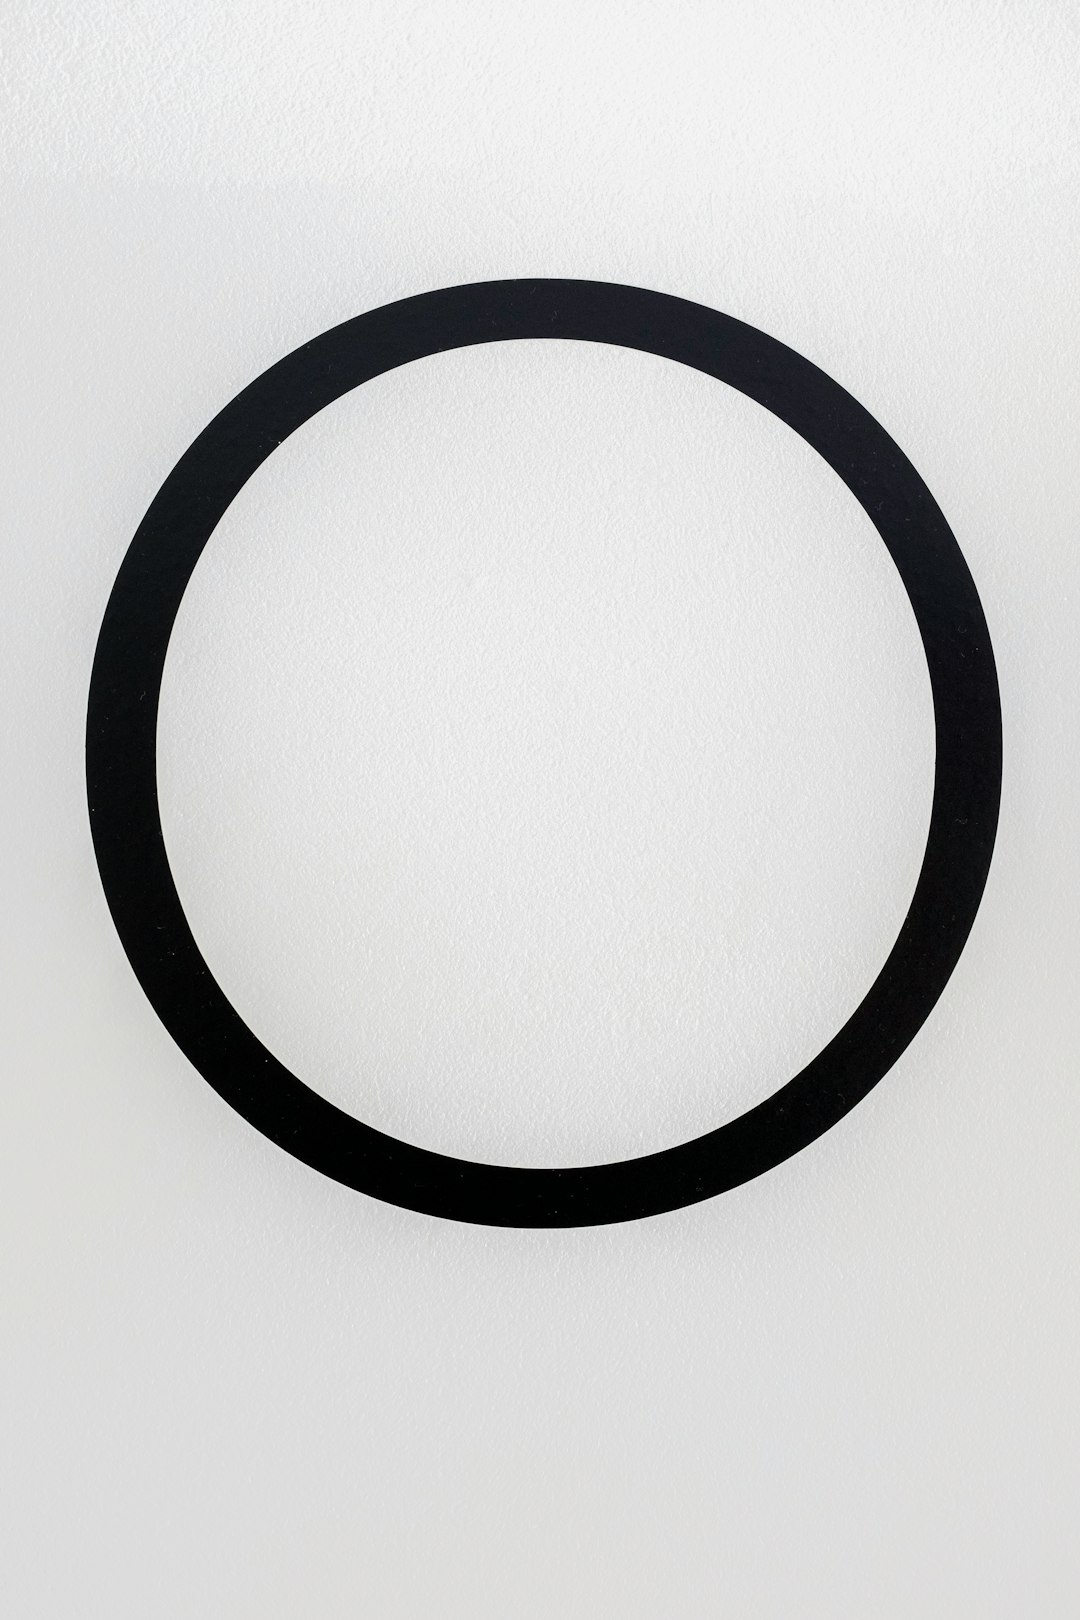 black round frame on white surface